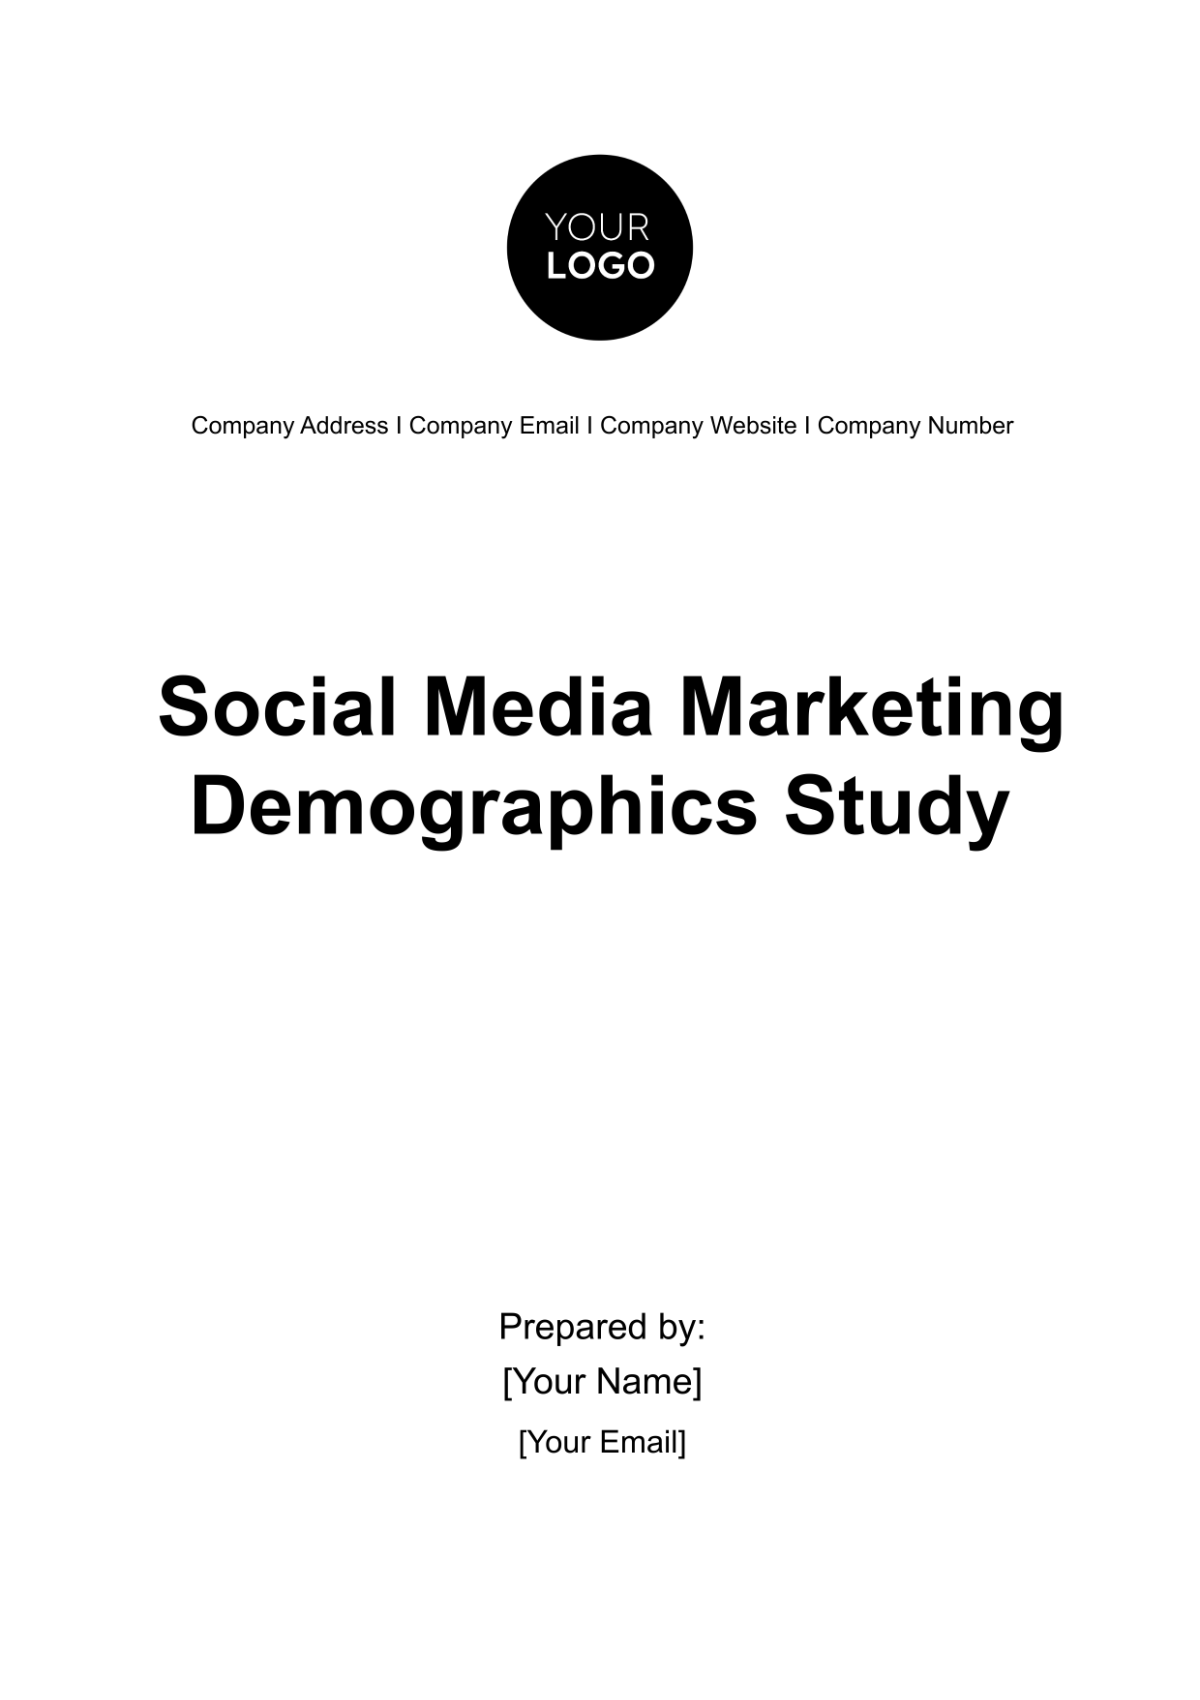 Social Media Marketing Demographics Study Template